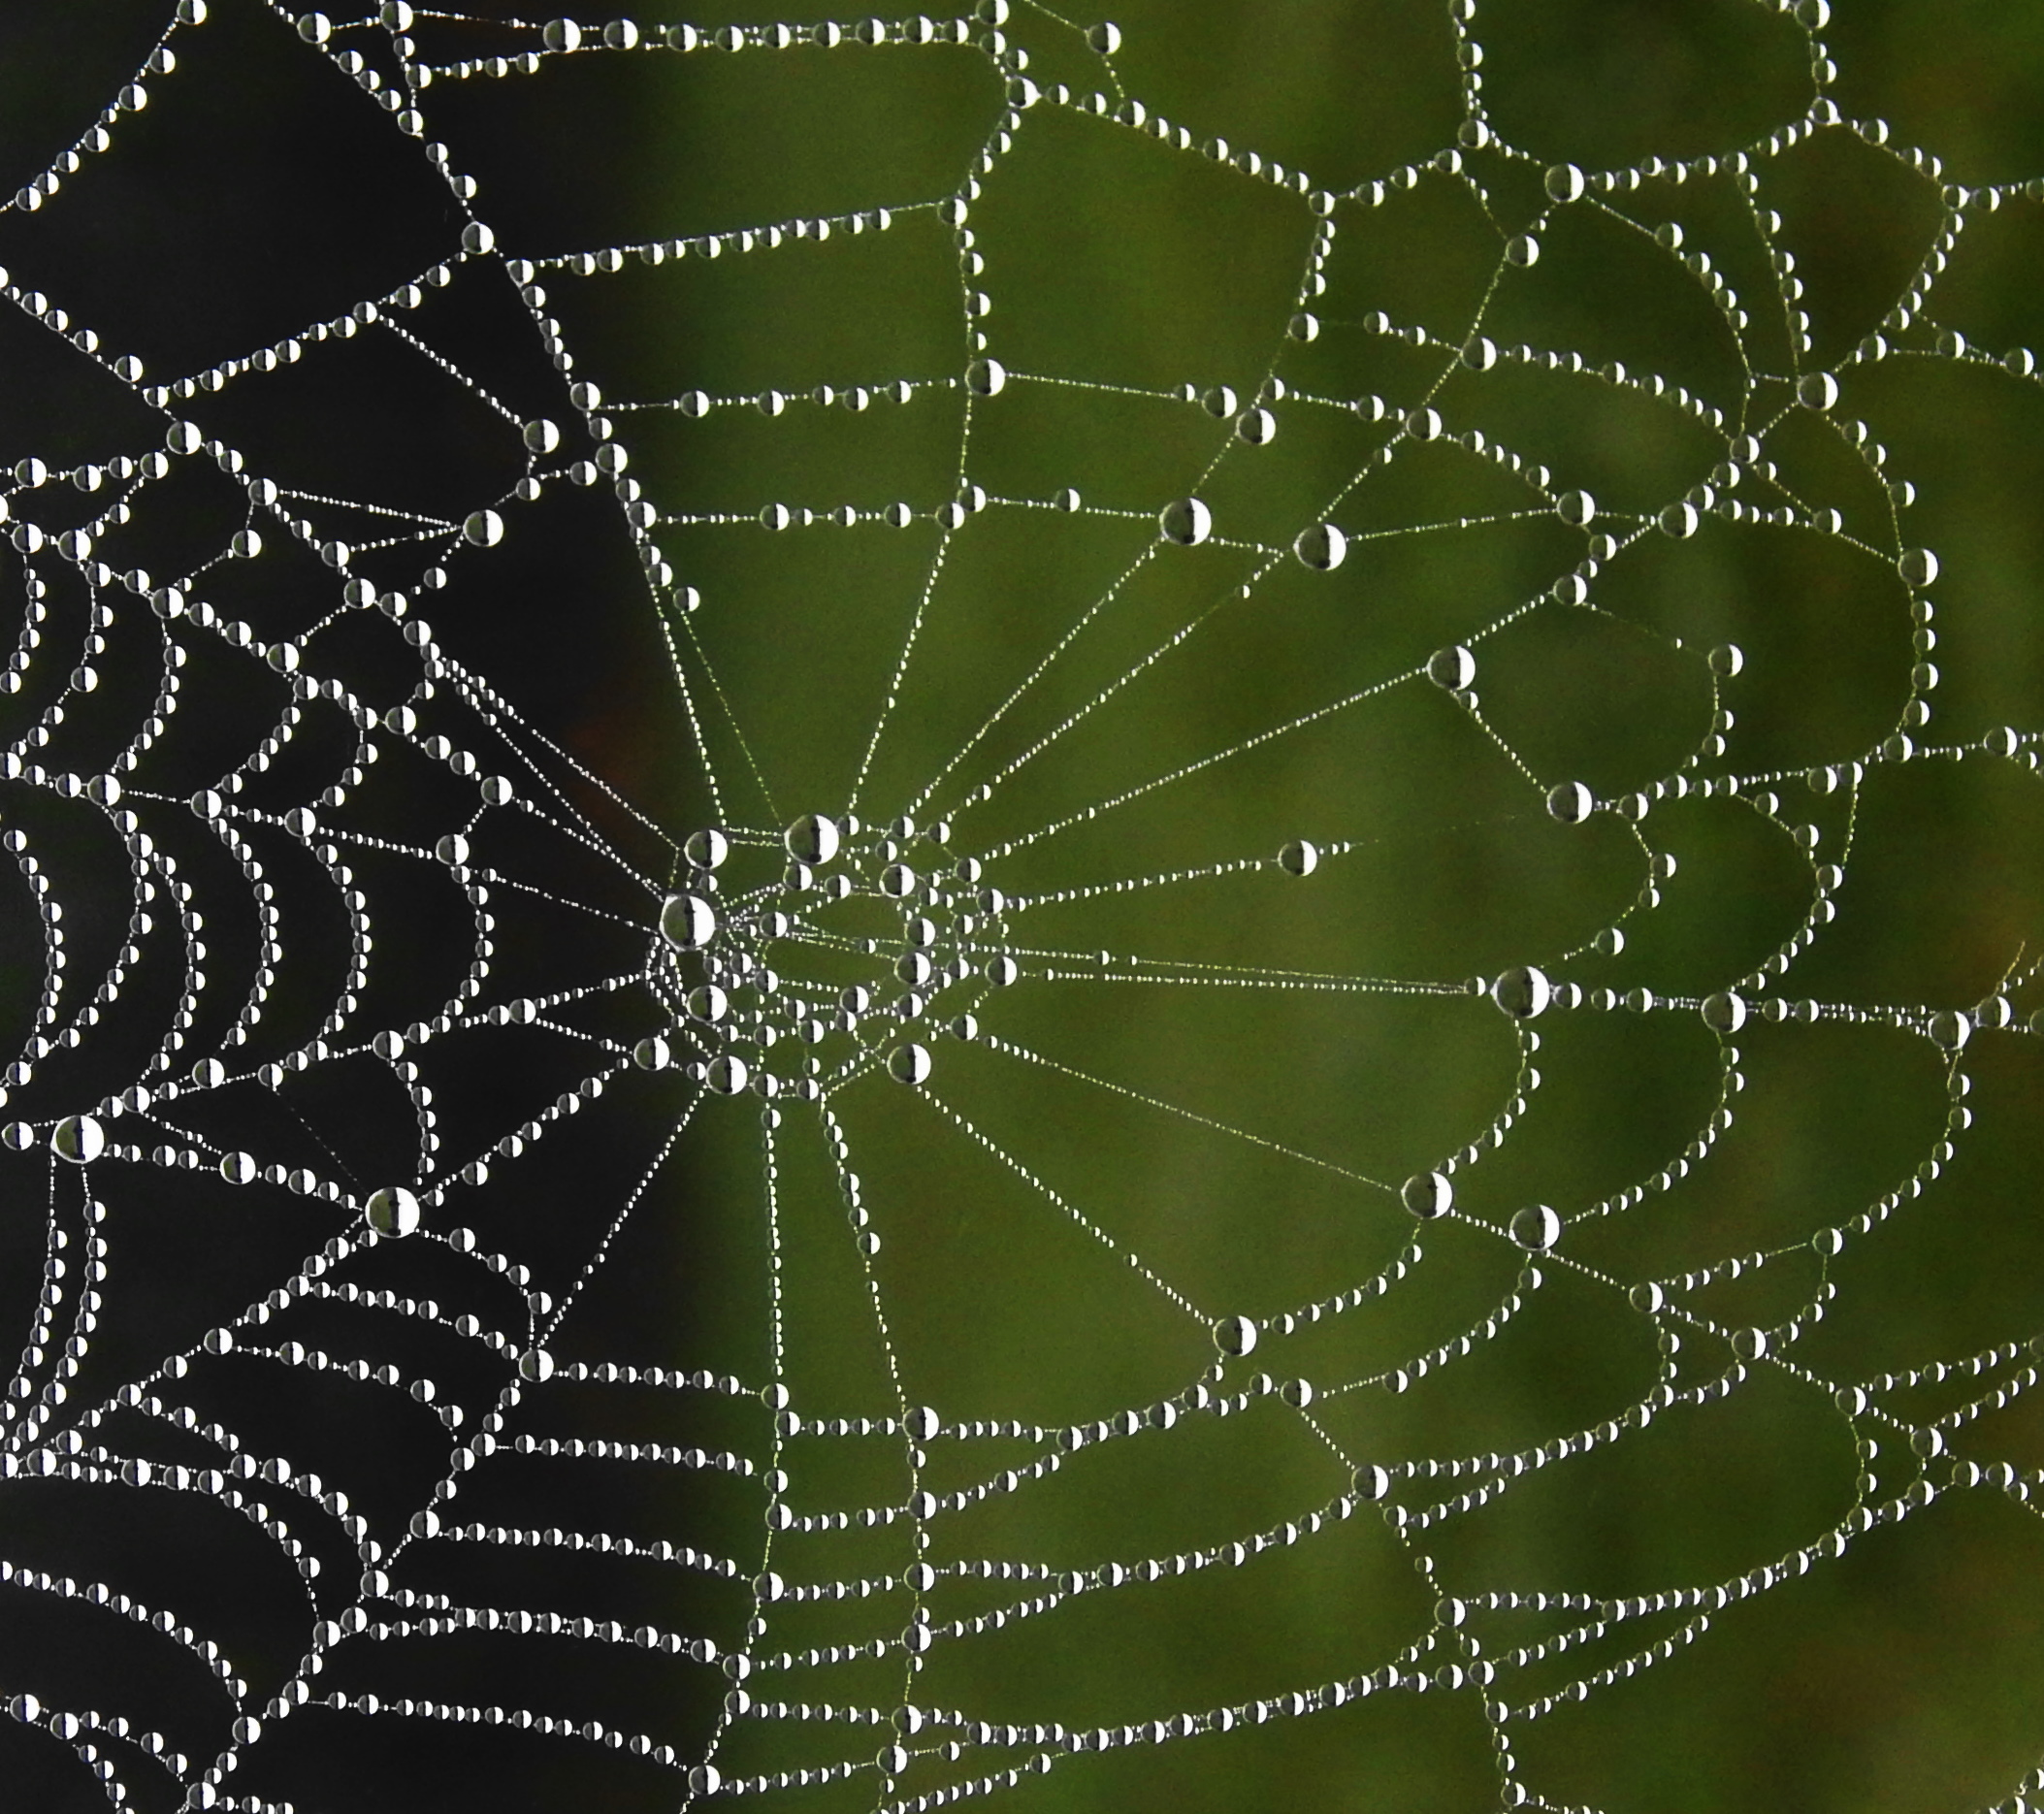 Spider Web Dew Drop Size - EPOD - a service of USRA